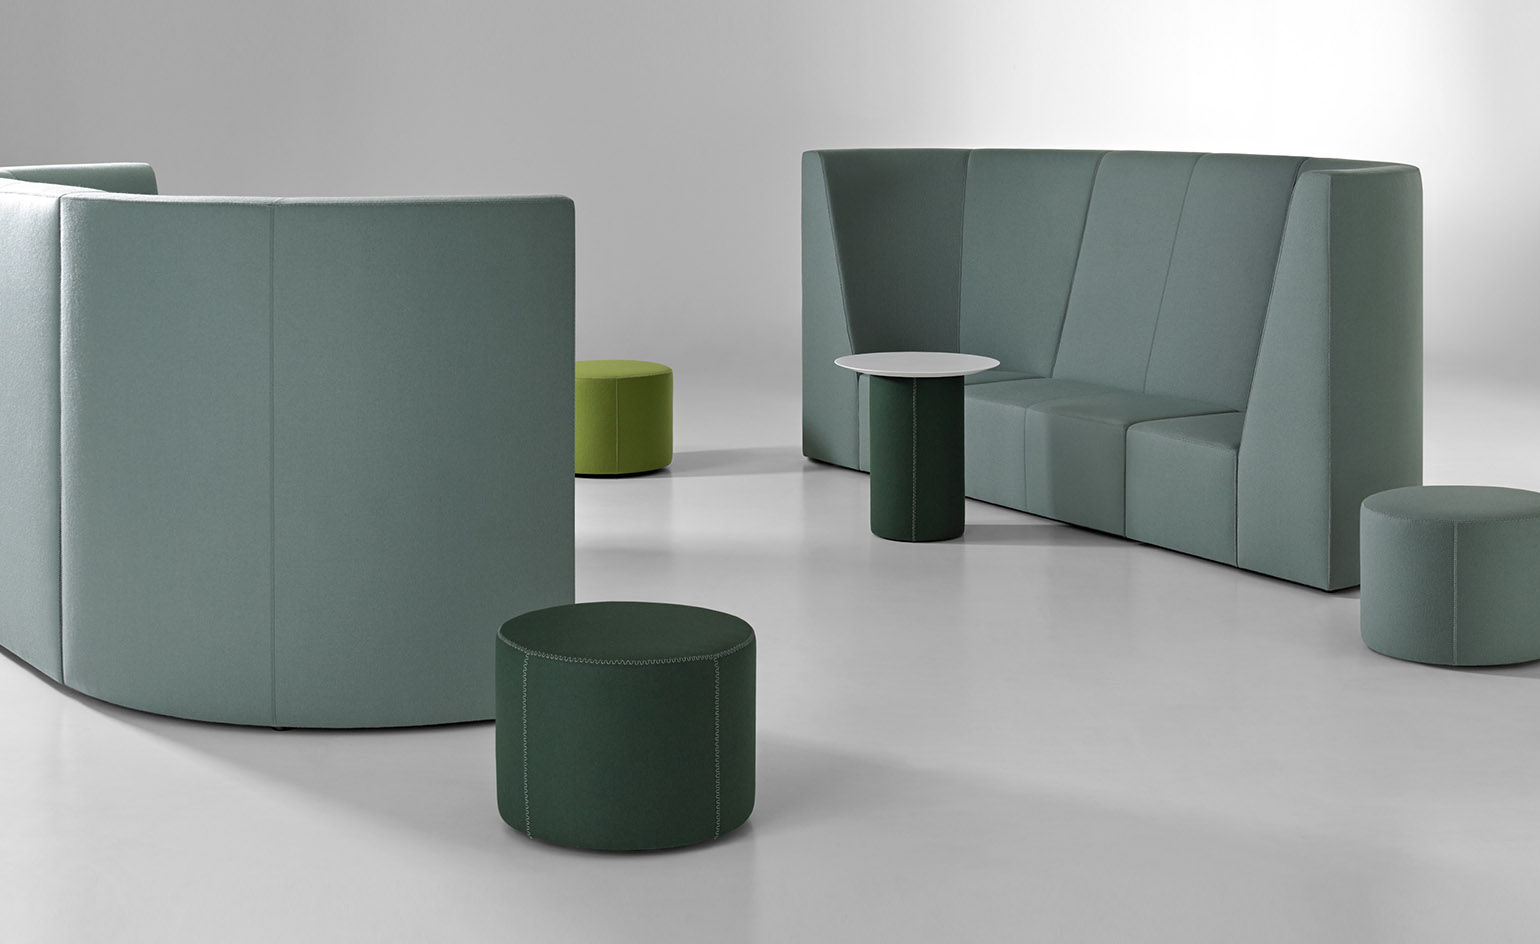 Joe Gebbia and Bernhardt Design create new office collection